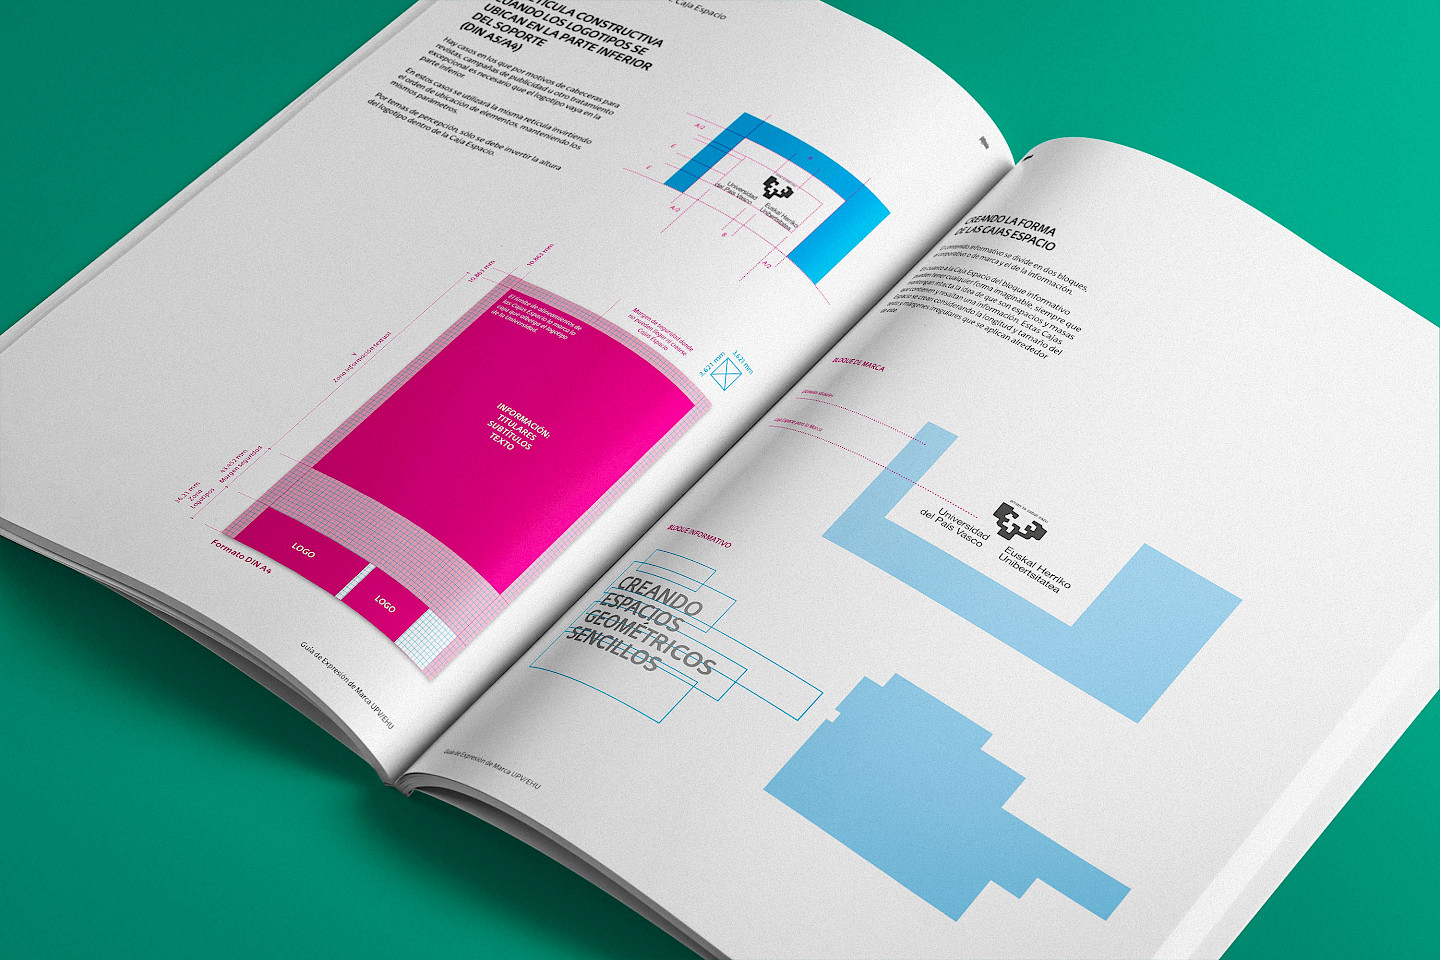 03 art narrative digital culture design app typography upv slider branding move 